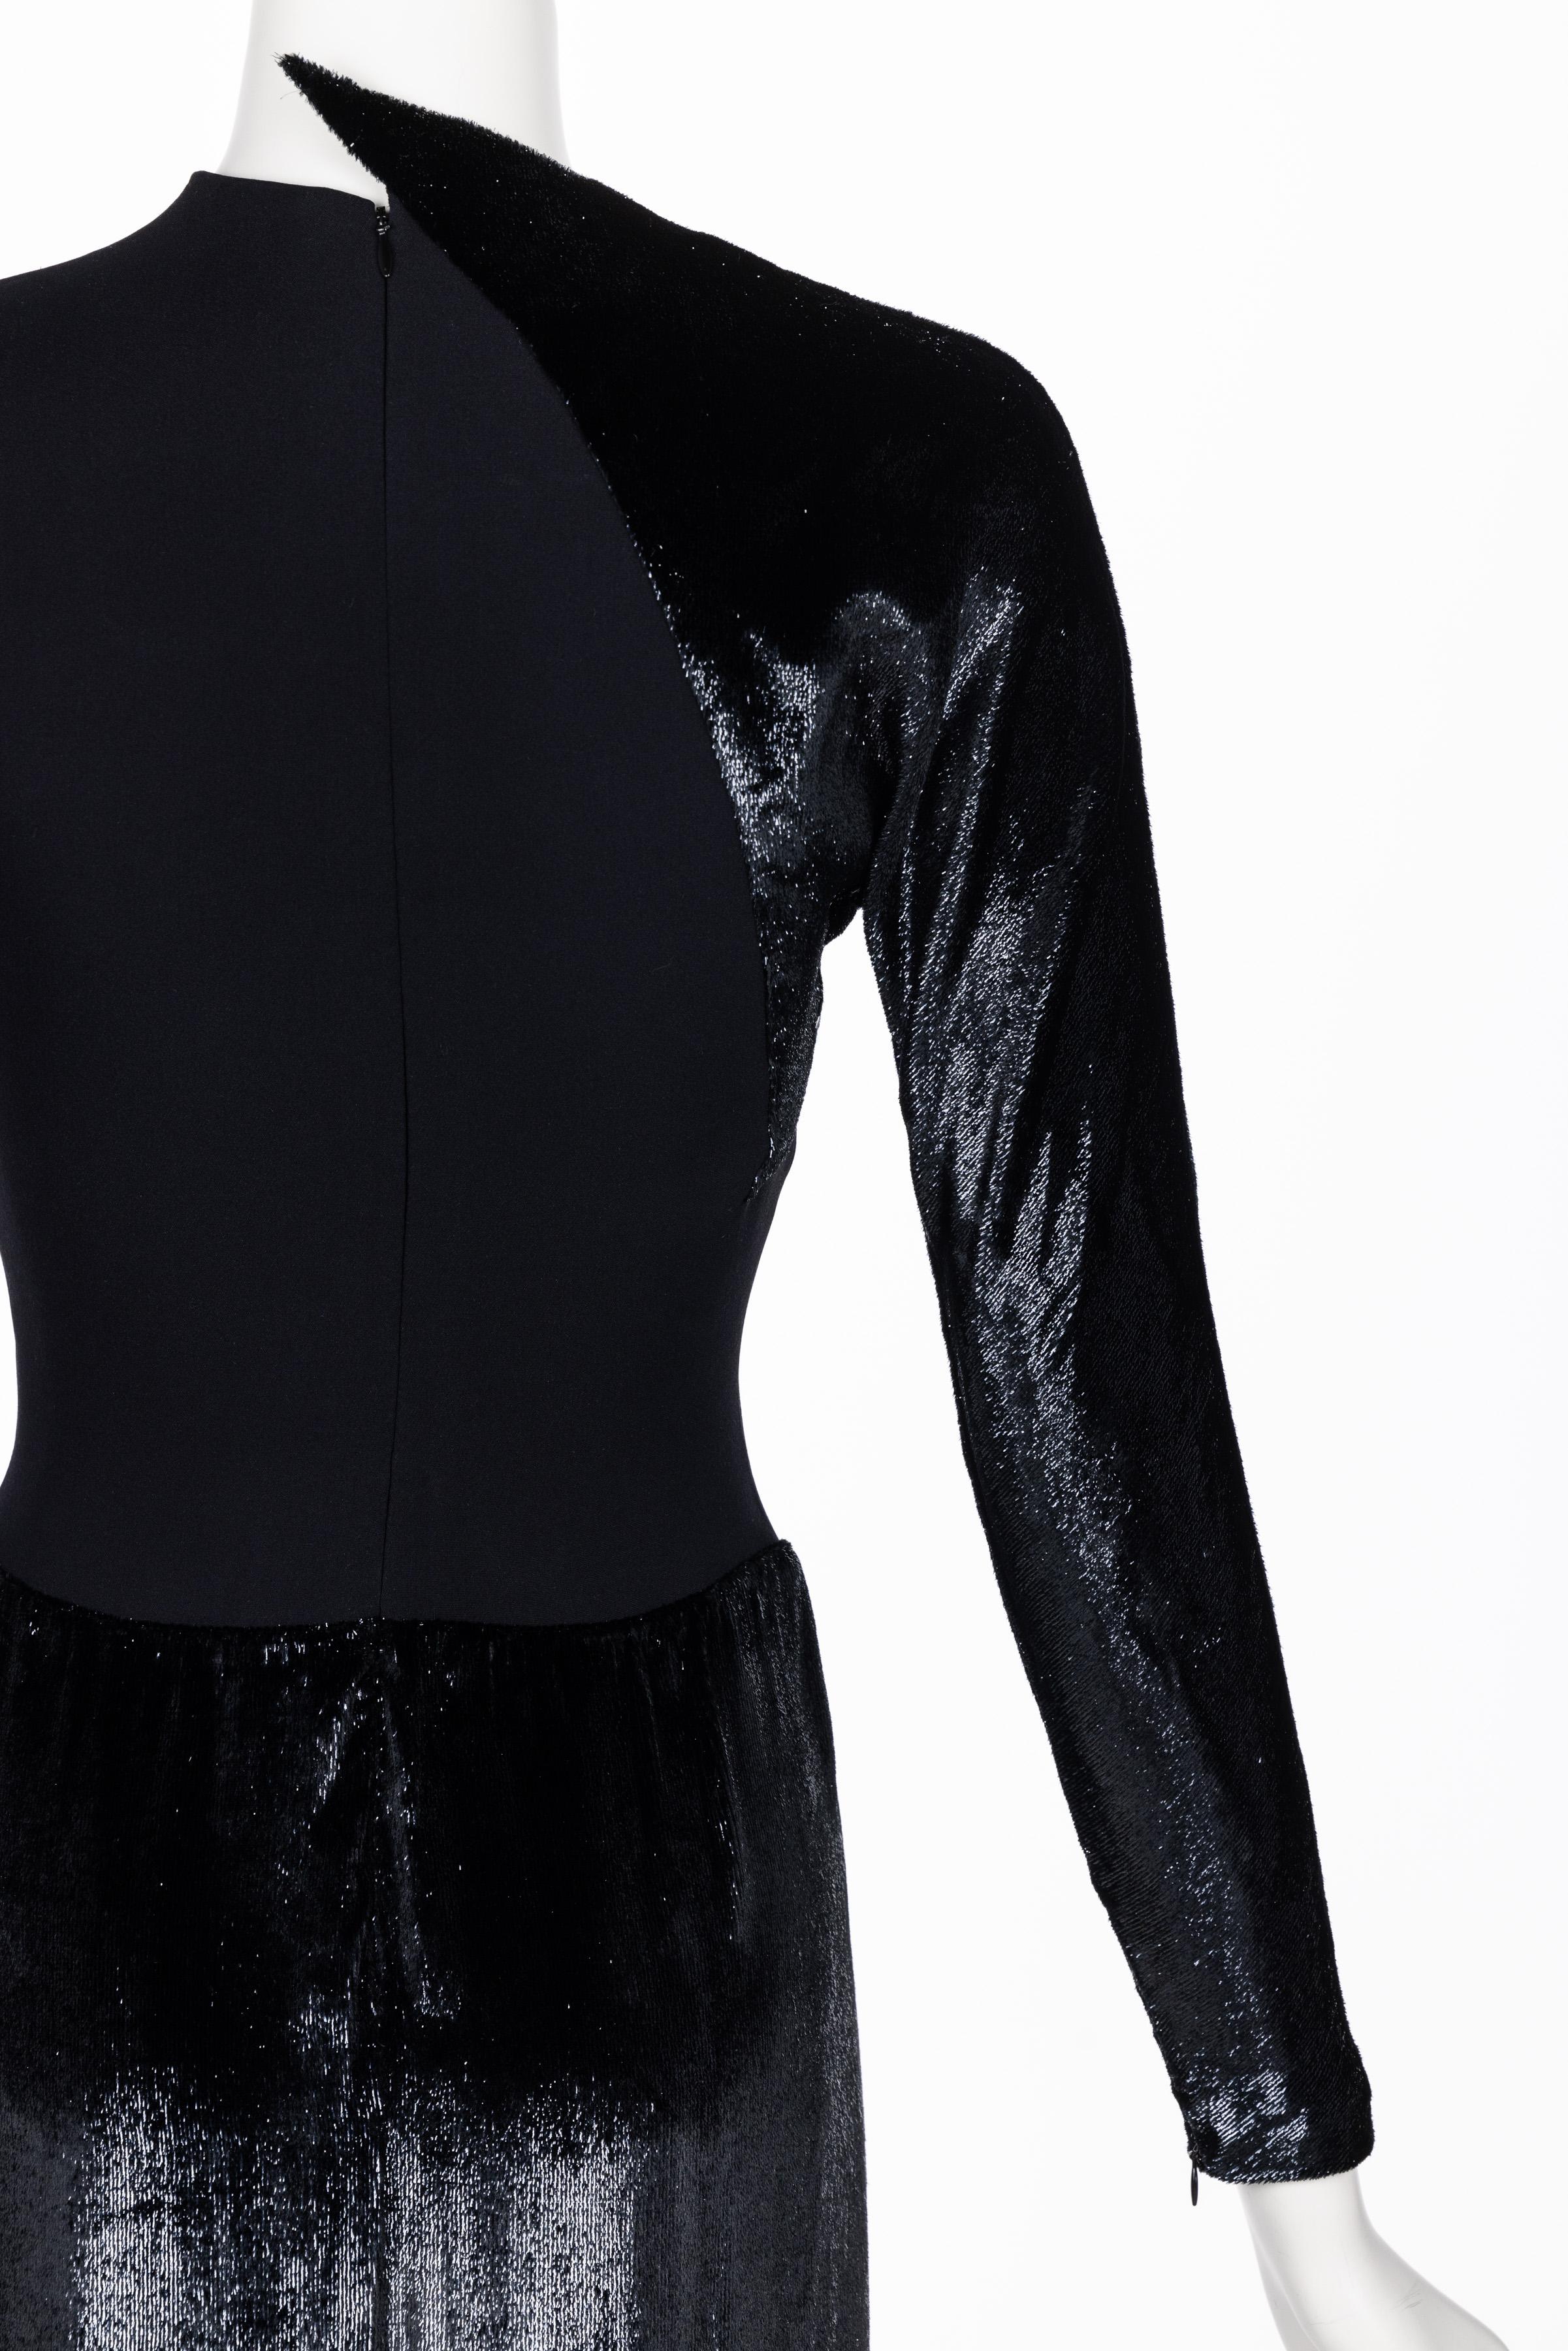 Geoffrey Beene Black Crepe Panne Velvet Dress 1990s For Sale 4